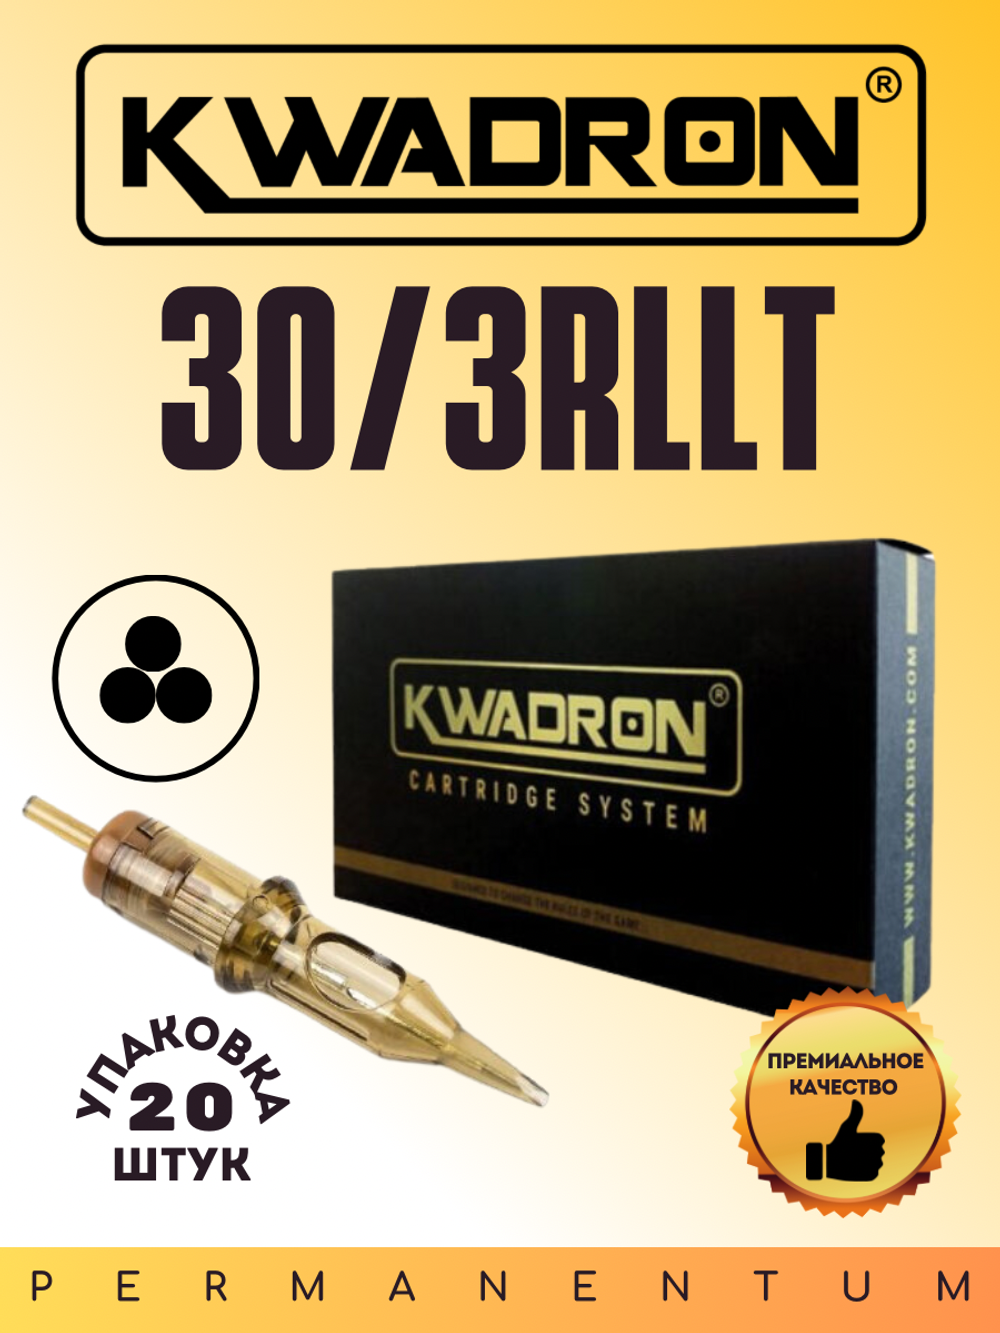 Картридж для татуажа "KWADRON Round Liner 30/3RLLT" упаковка 20 шт.